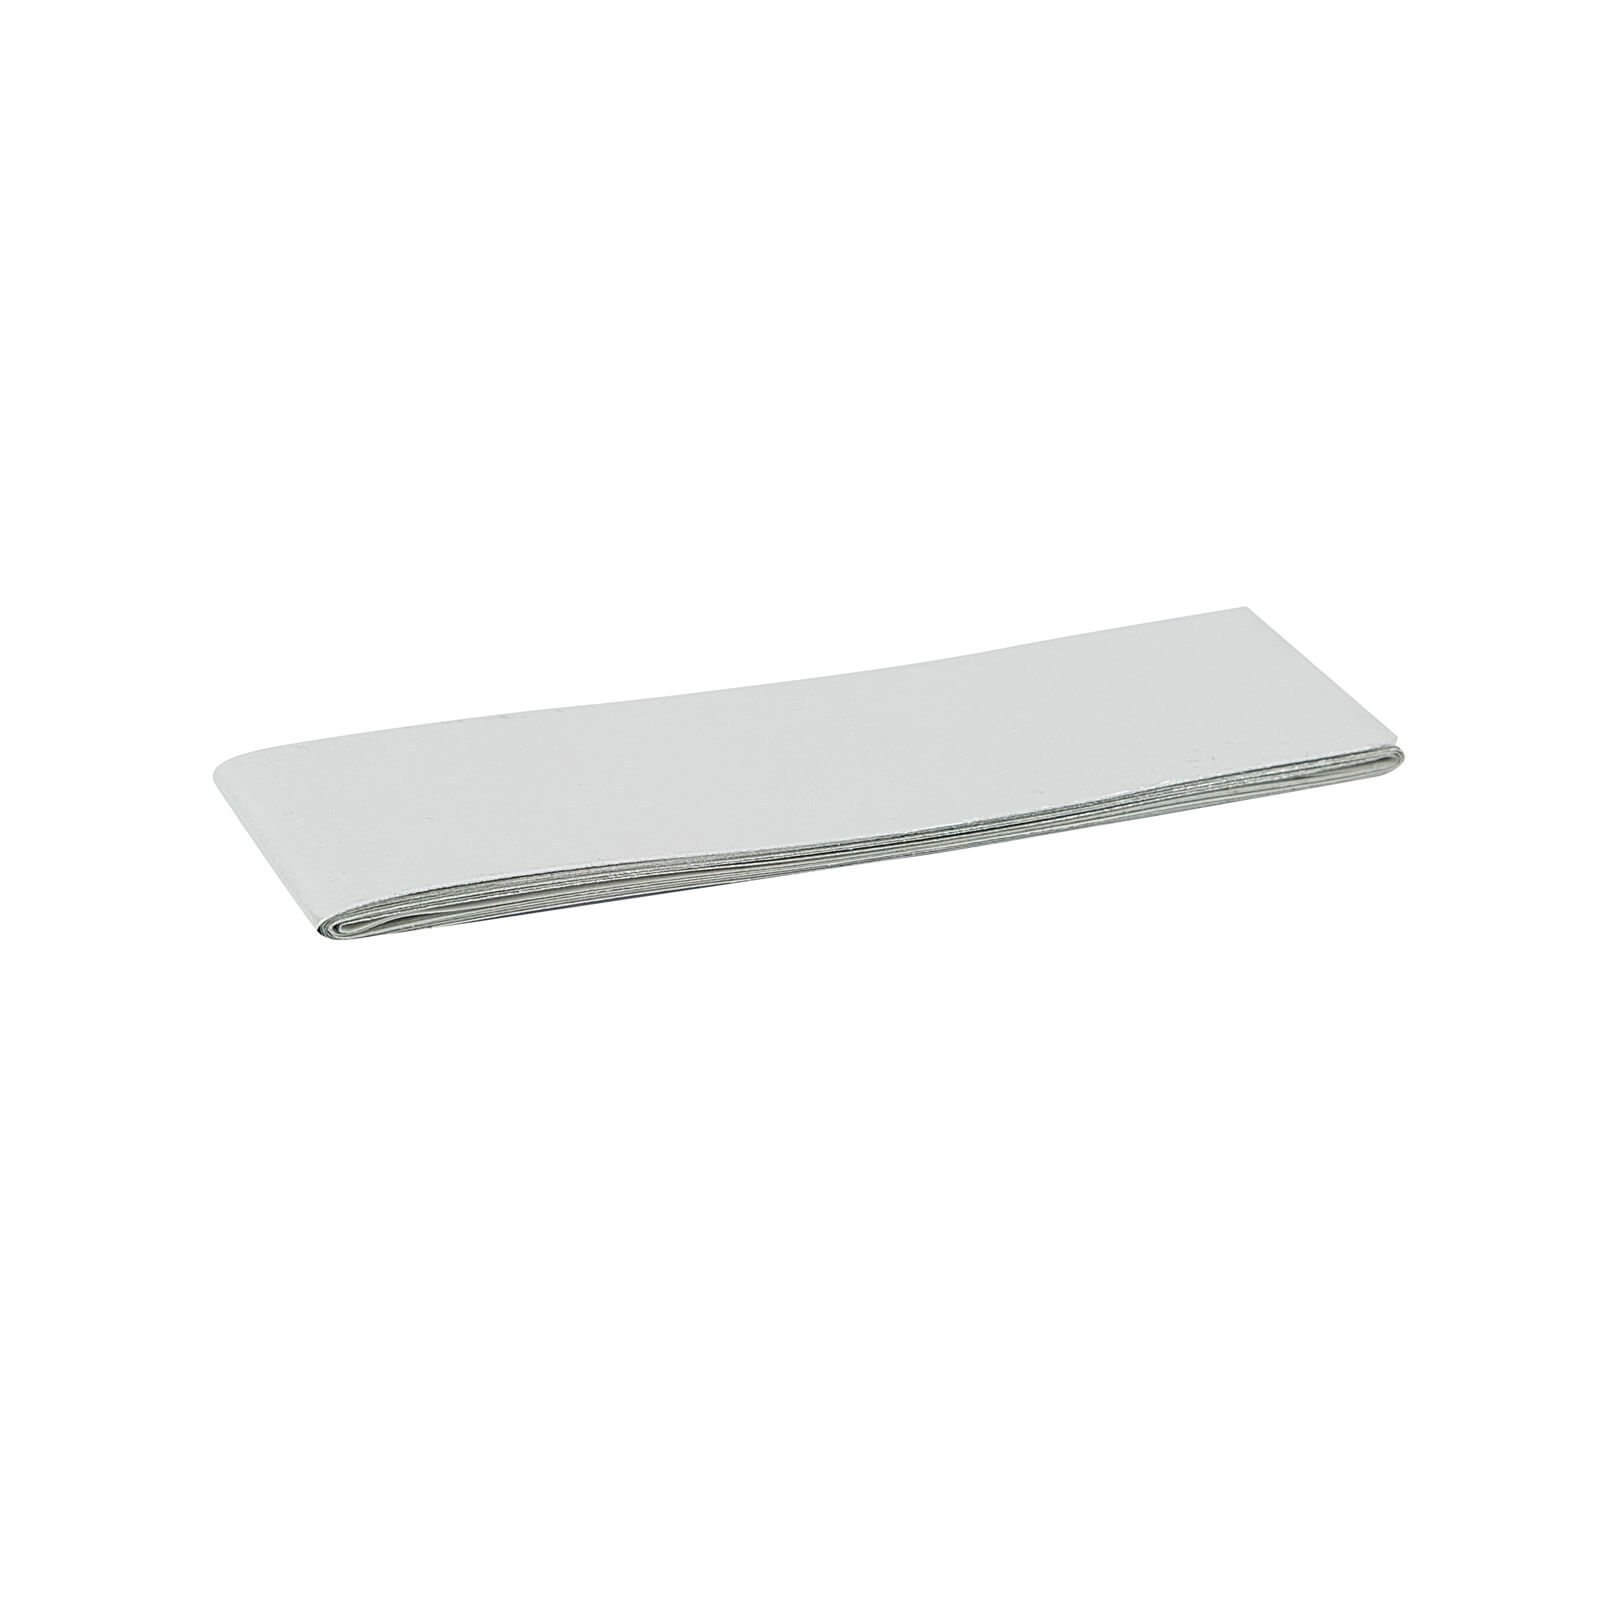 Unika Worktop Heat Reflective Aluminium Tape